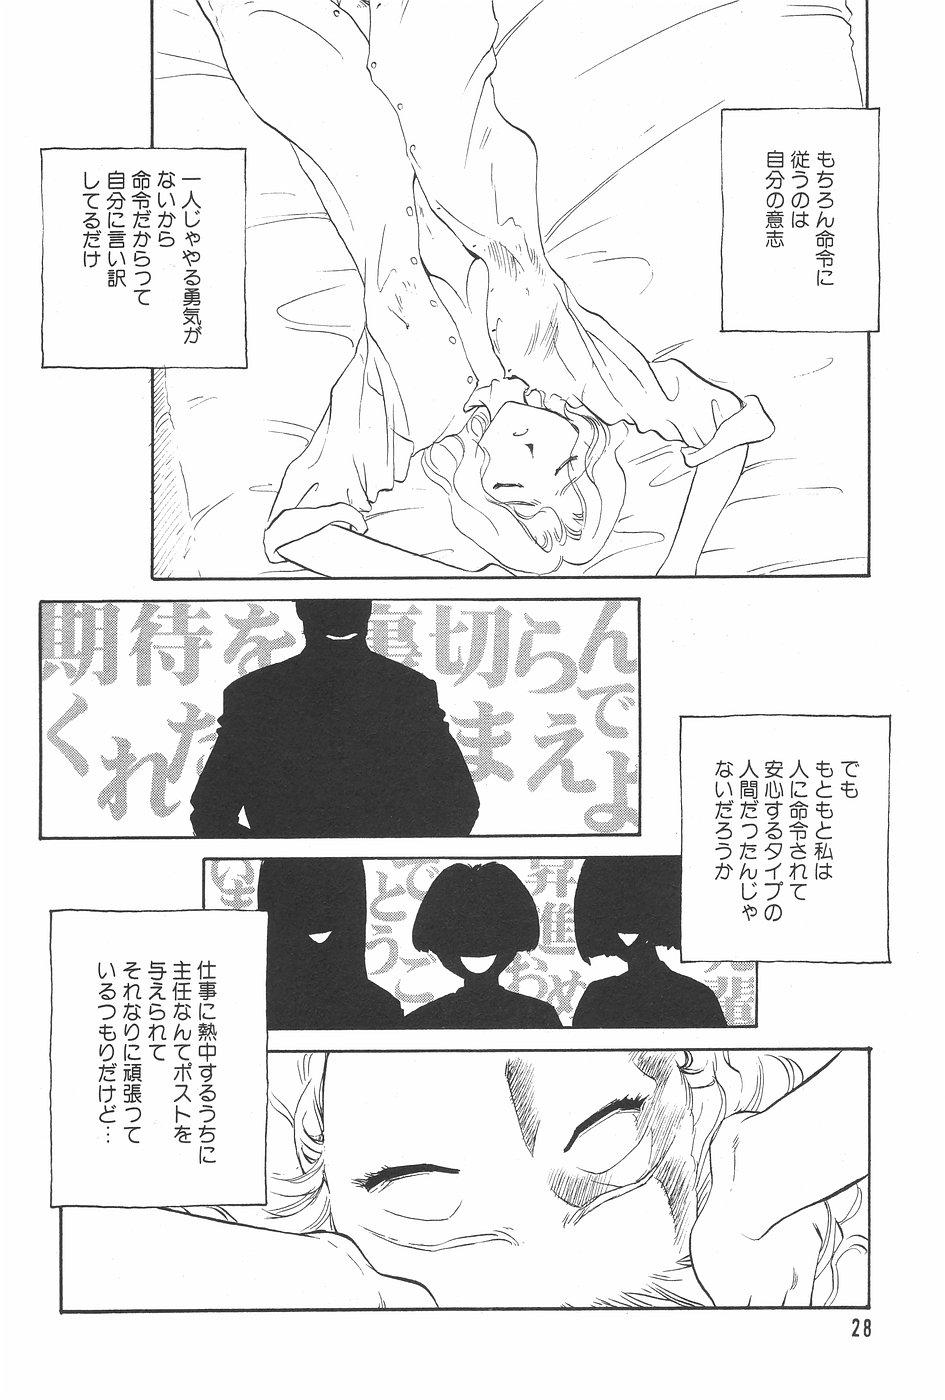 Manga Hotmilk 1997-07 27